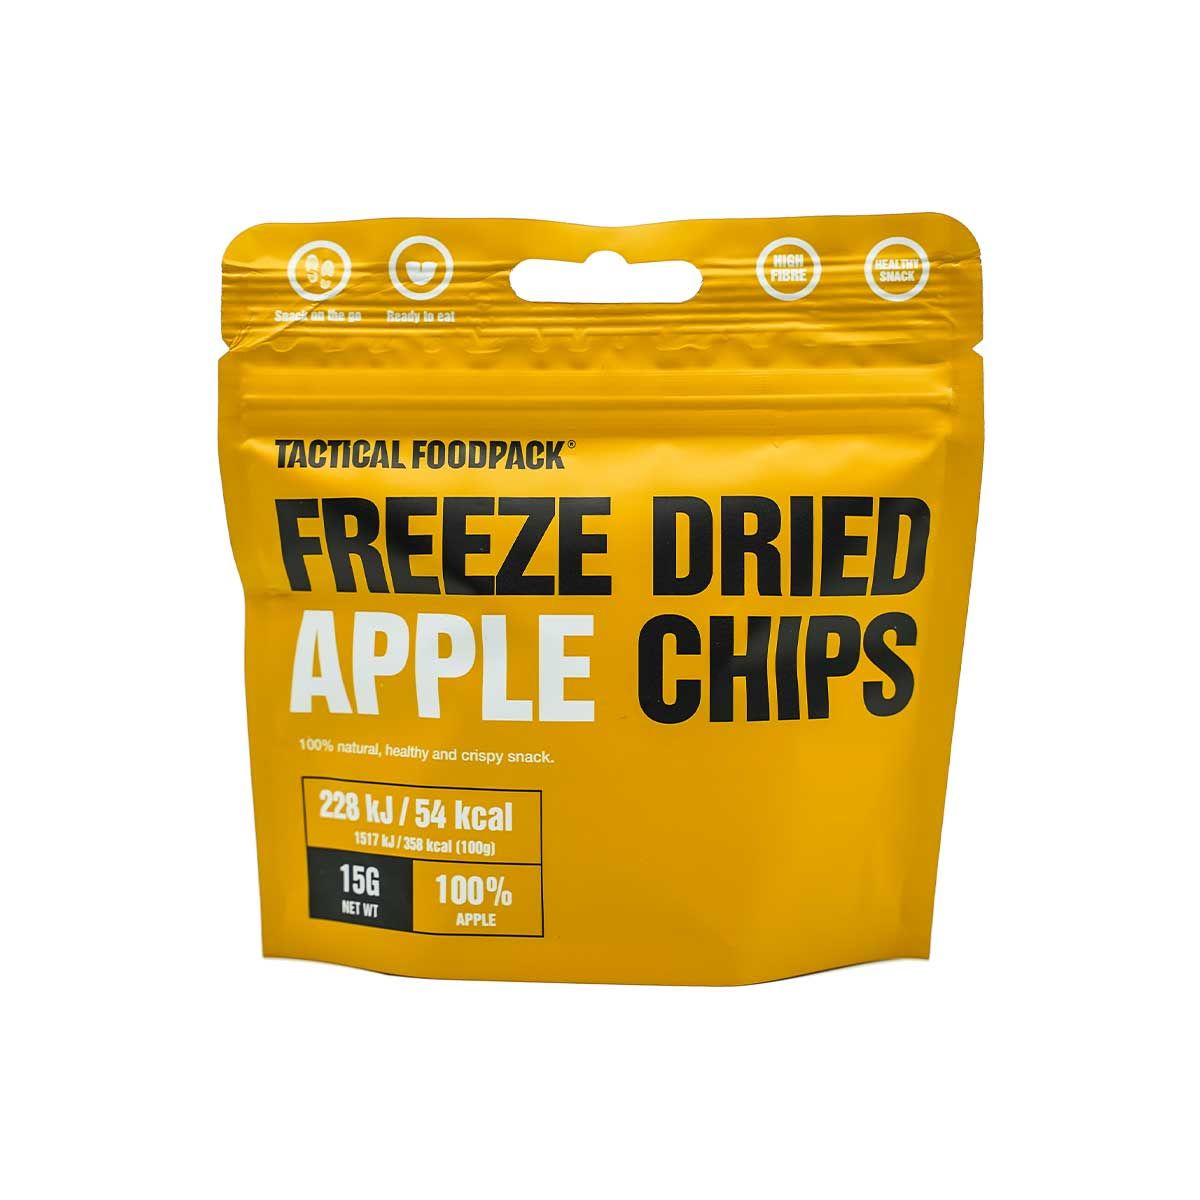 Apples - Freeze dried fruits